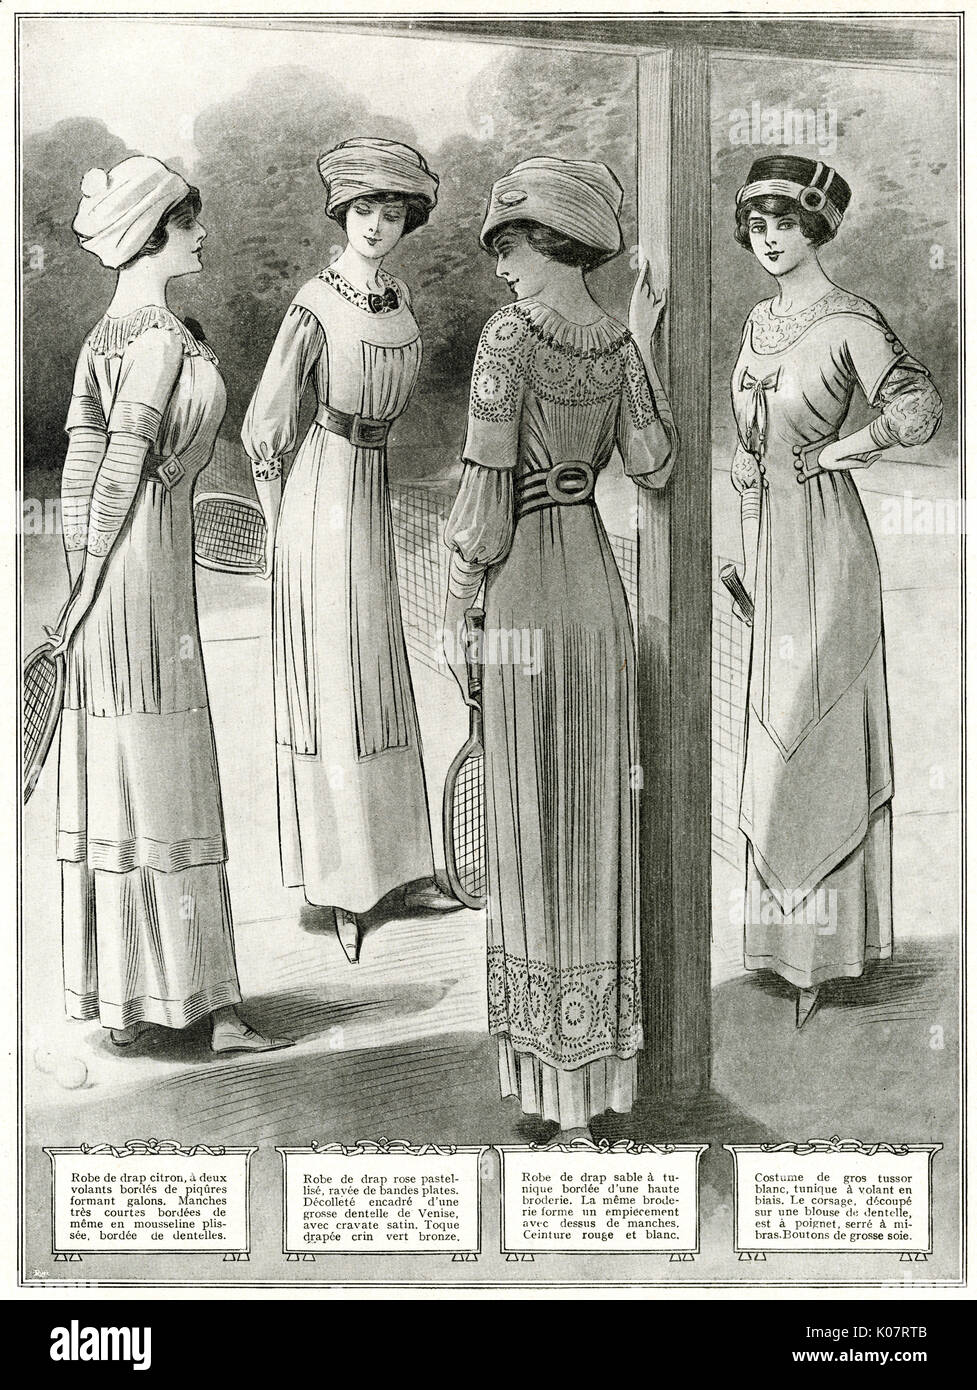 1910 woman fashion fotografías e imágenes de alta resolución - Alamy